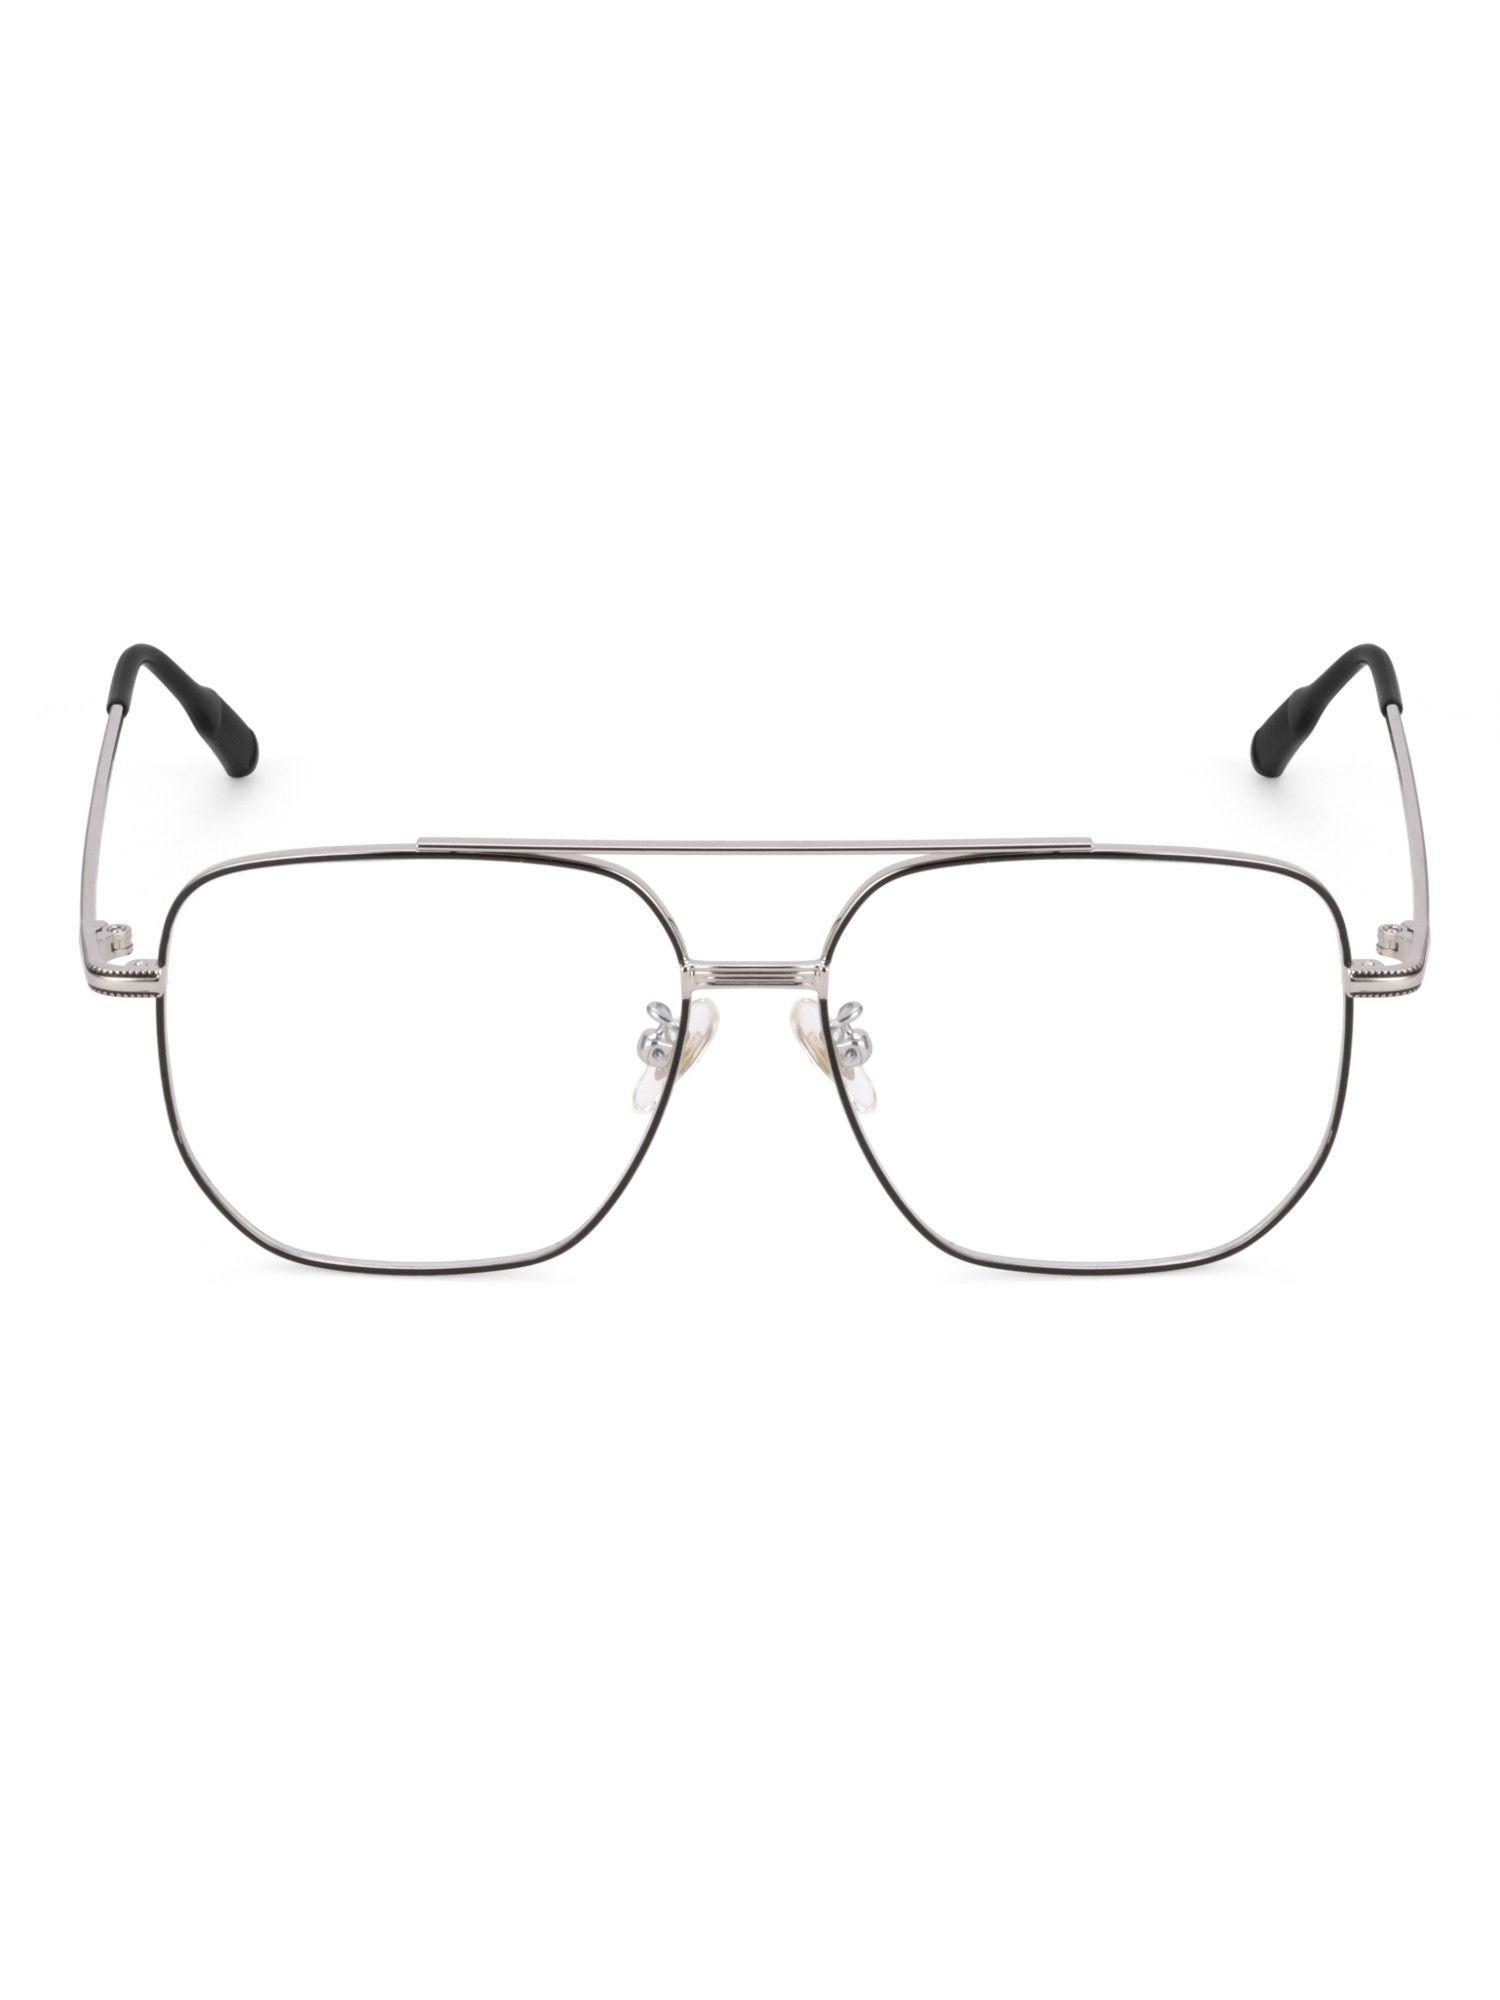 square silver black specs for men women sf0088-c2